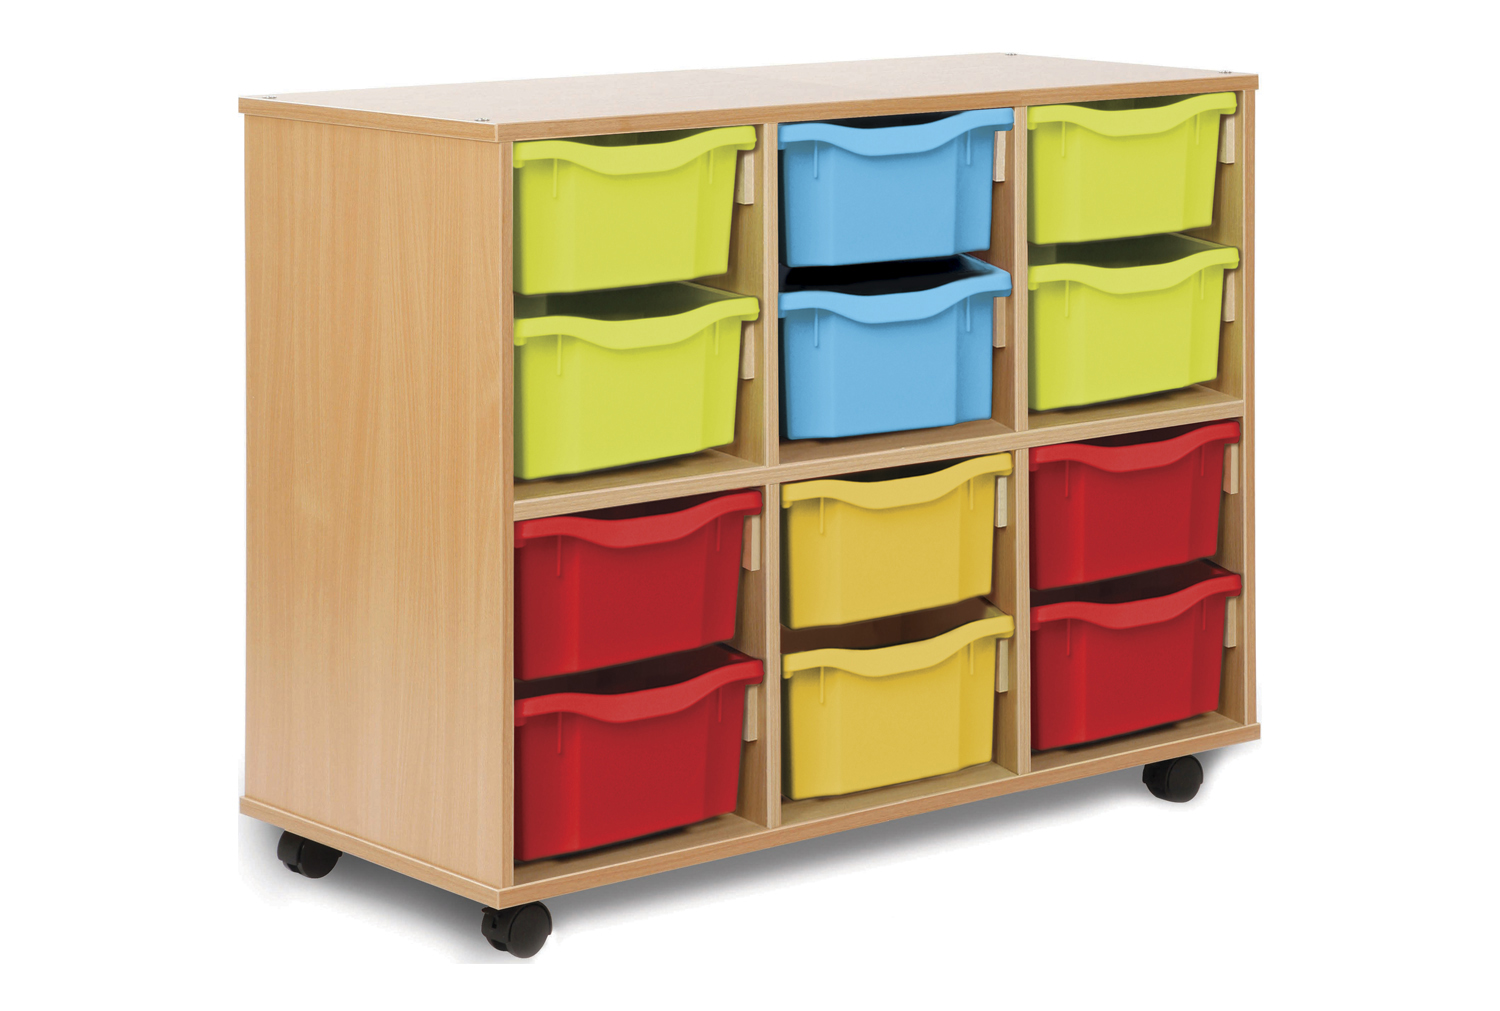 Allsorts 12 Deep Classroom Tray Storage Unit, Red/Blue/Yellow Classroom Trays